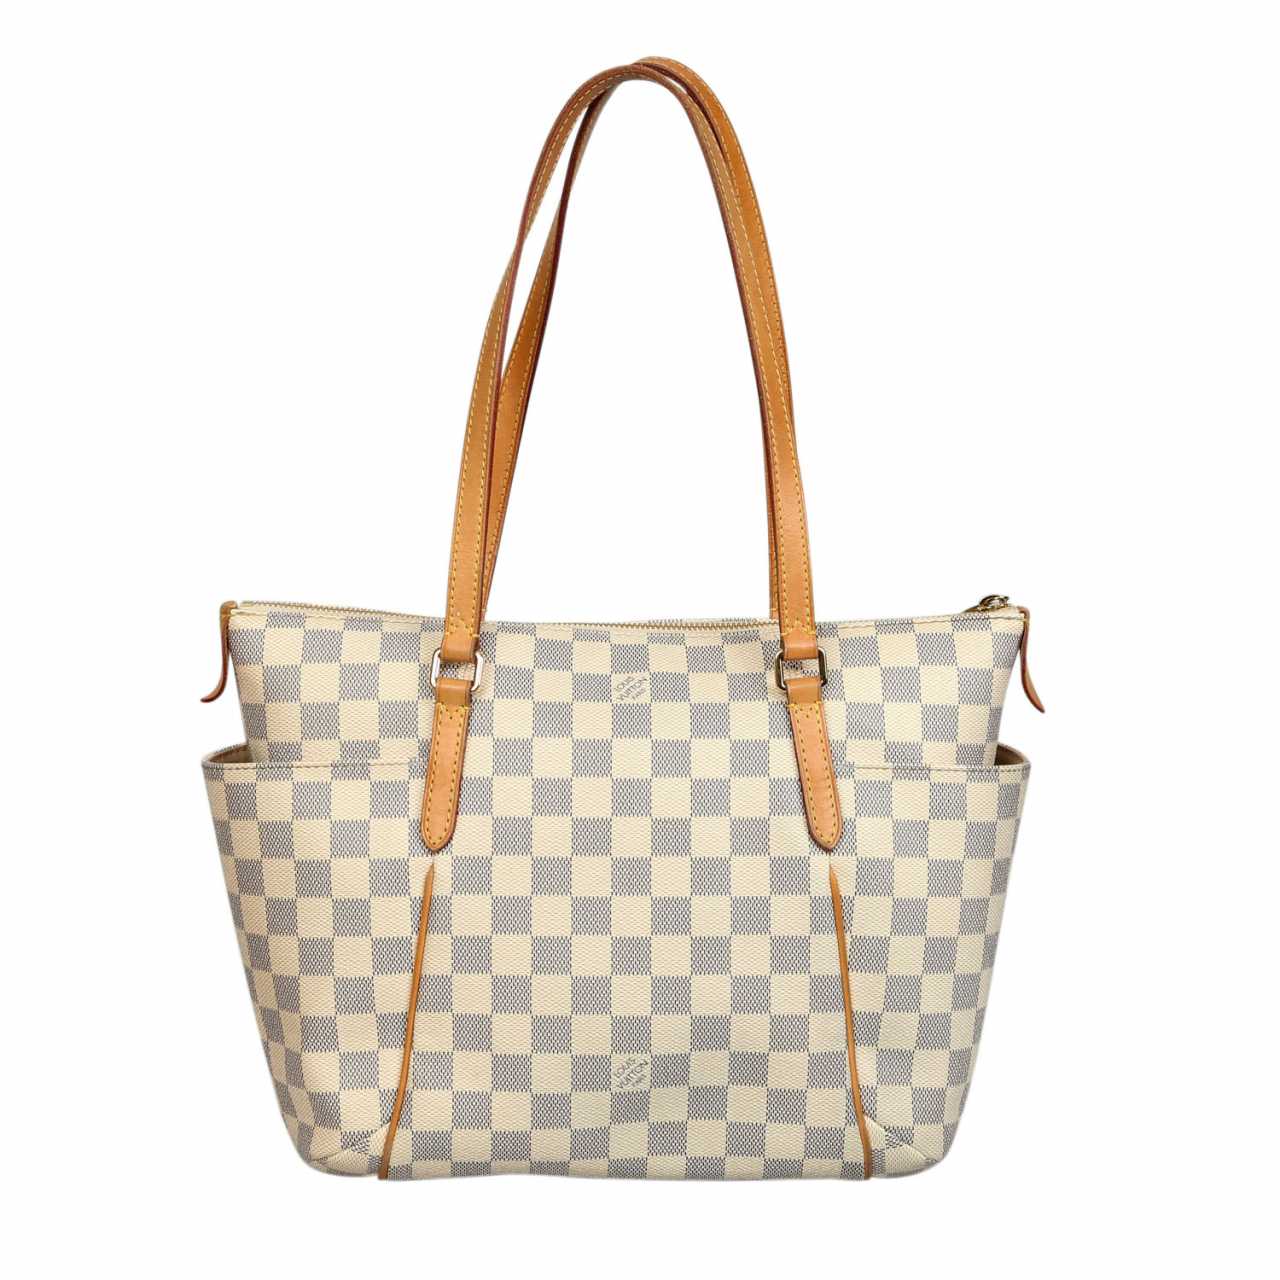 Shop Bag Louis Vuitton Class A online